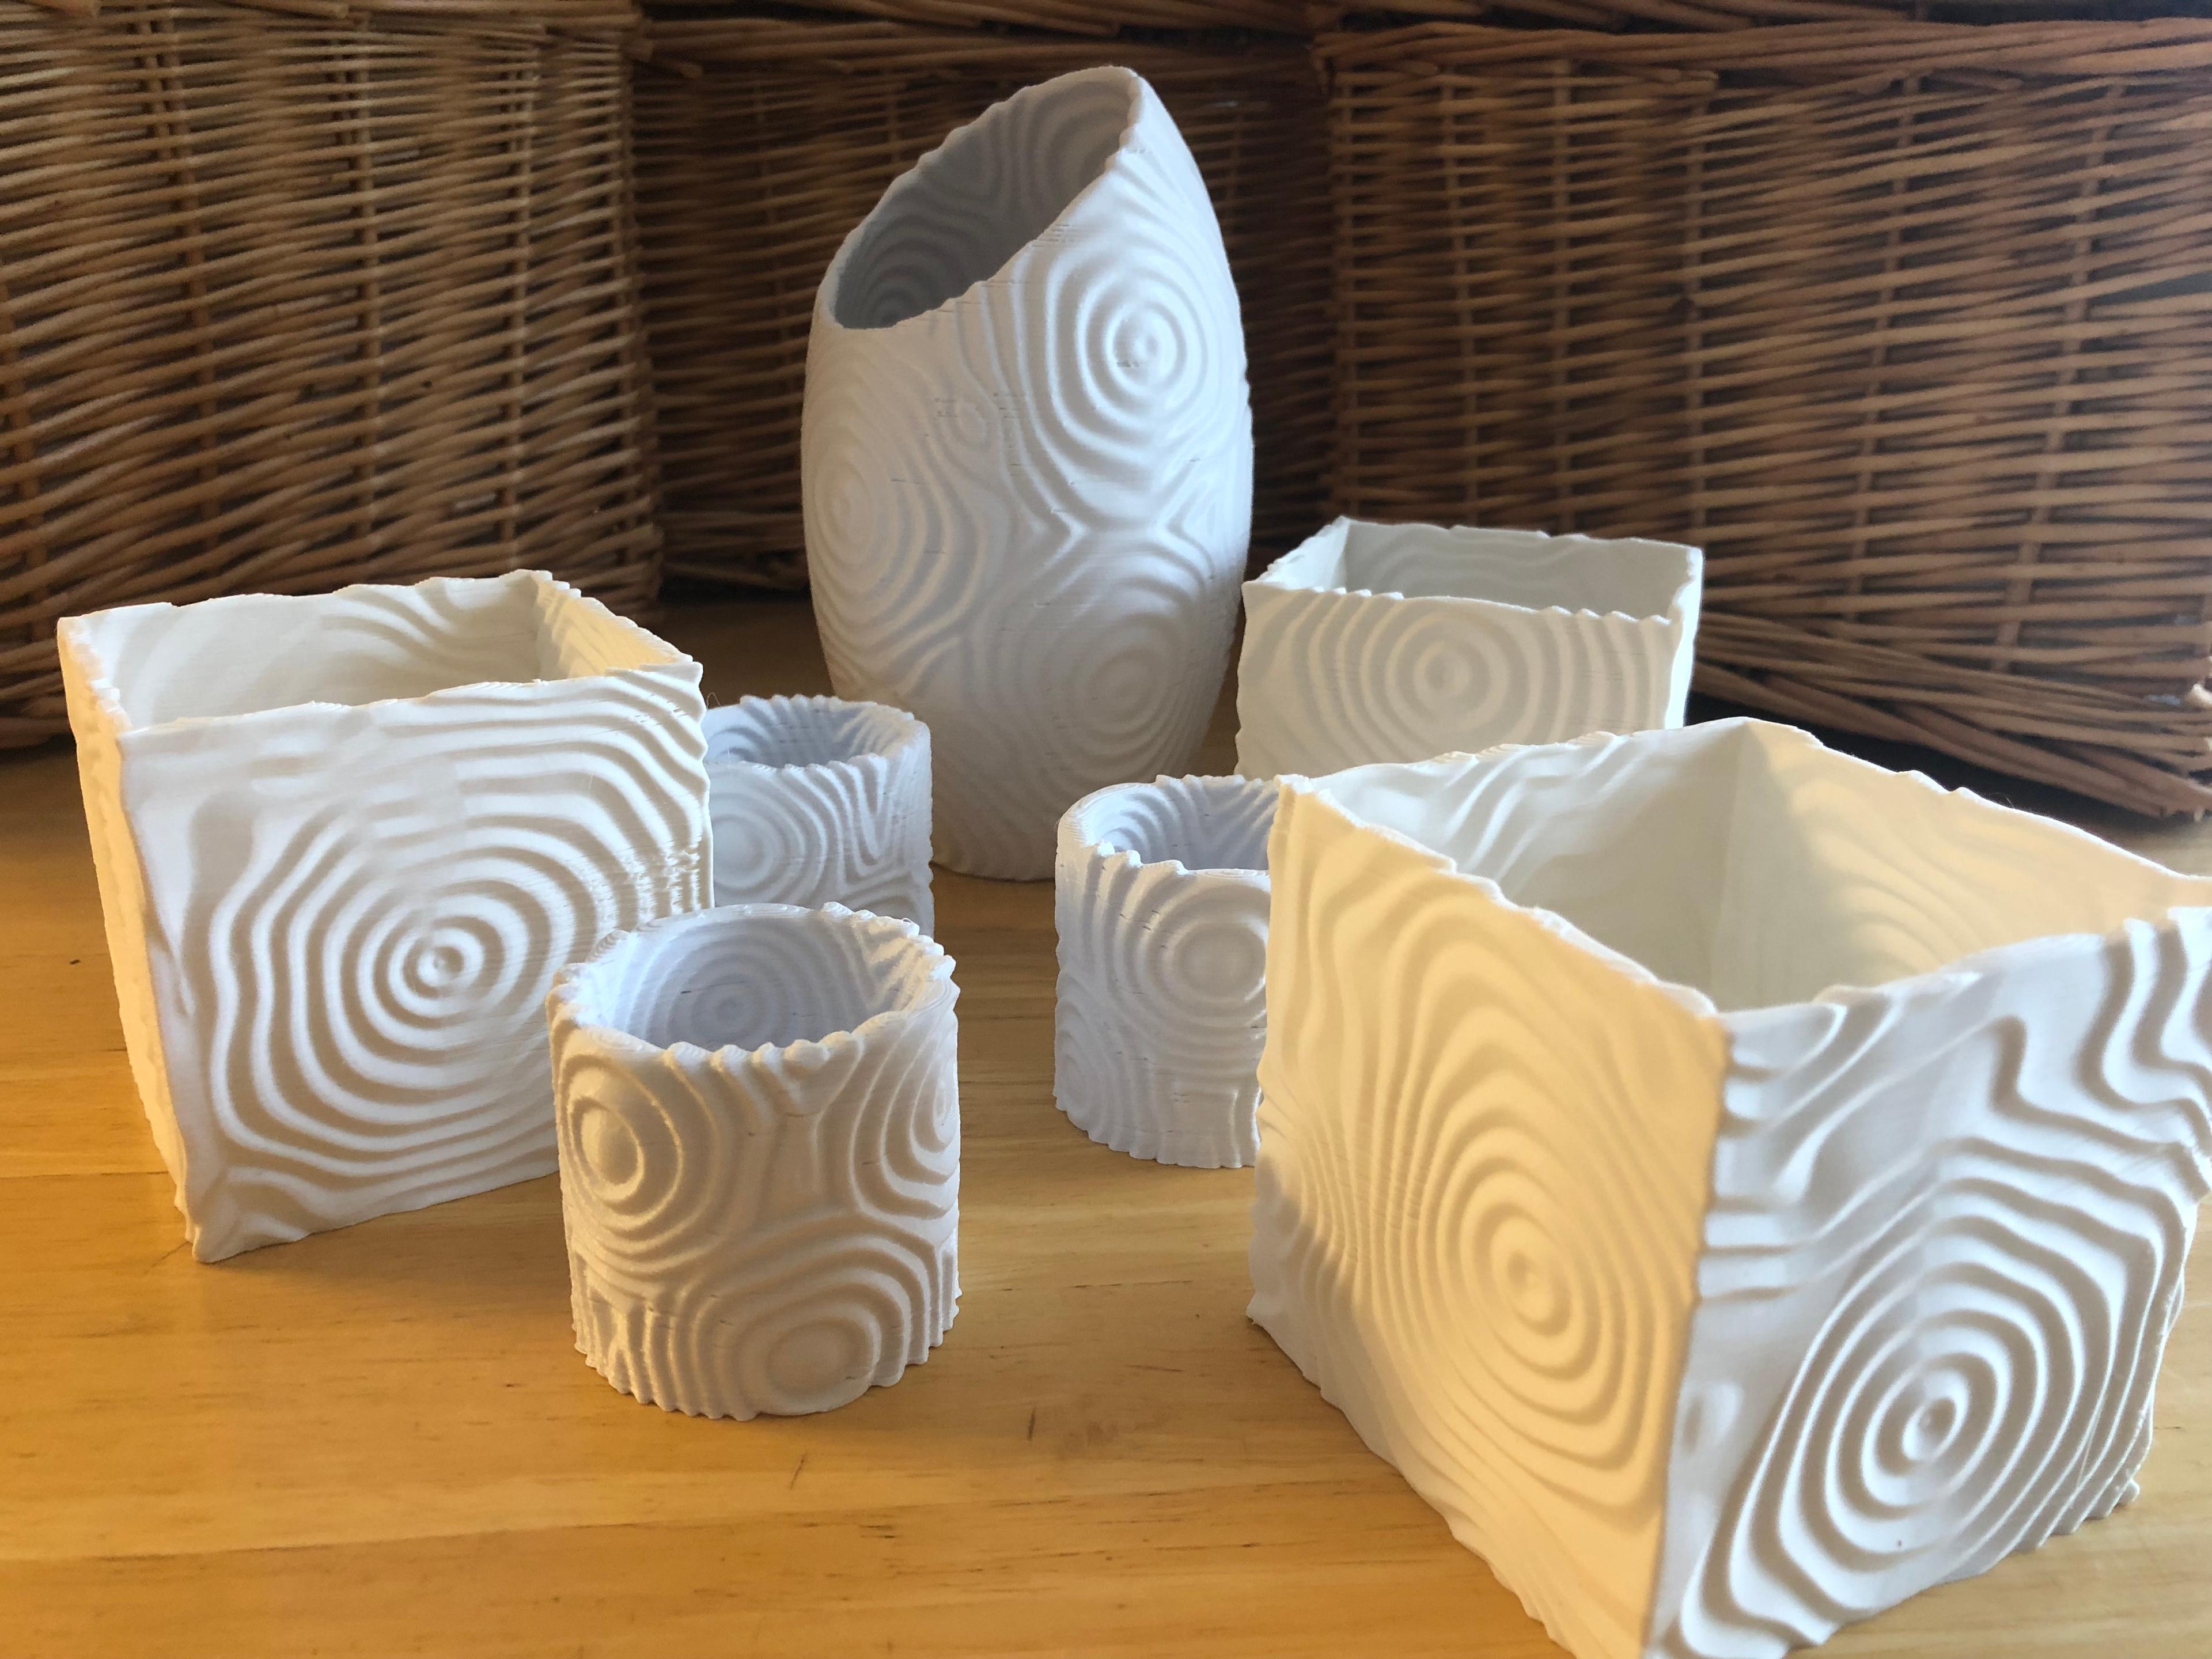 Ripple Vases (Round) 3d model